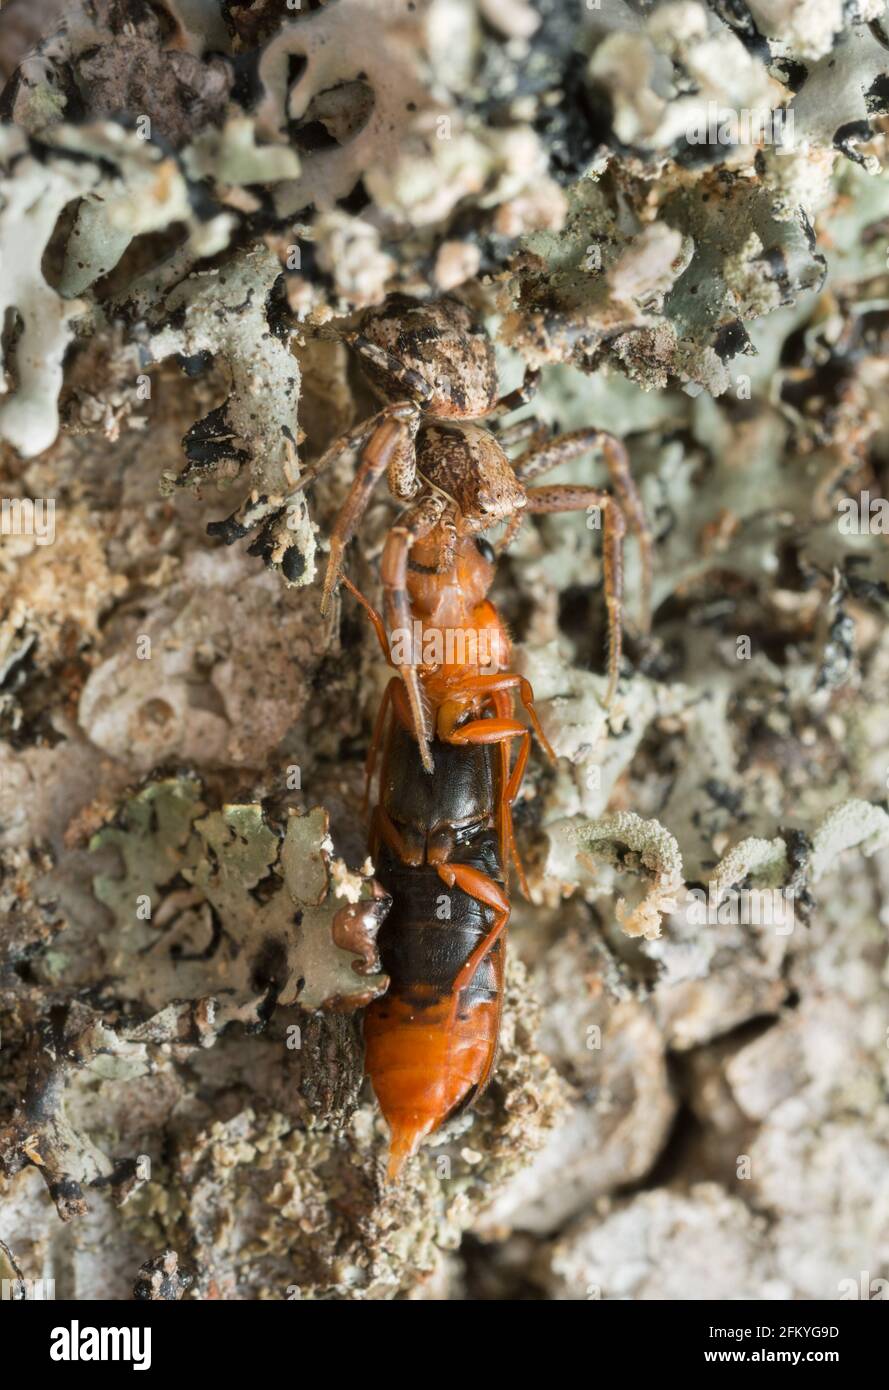 Female Xysticus audax with caught beetle, Hylecoetus dermestoides Stock Photo